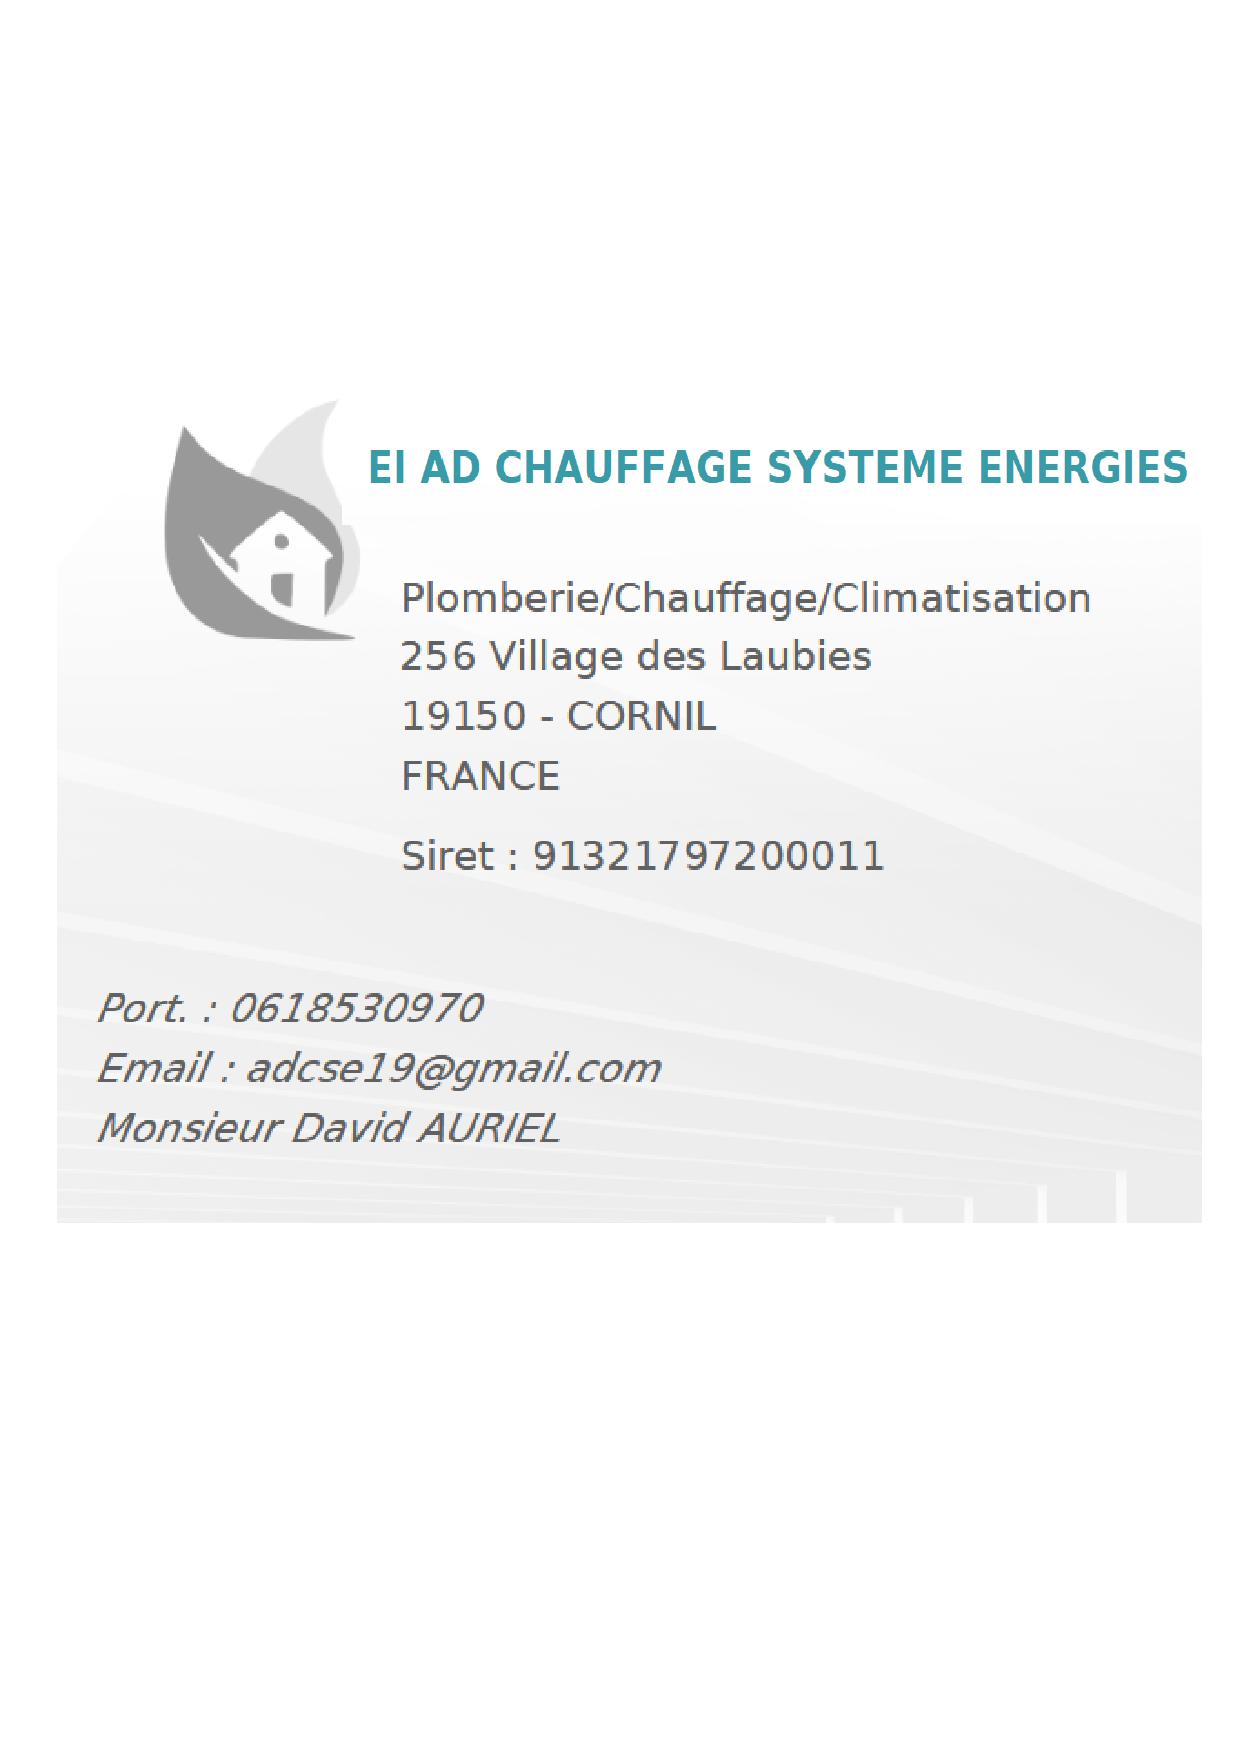 ELAD Chauffage Systeme Energies -1.jpg